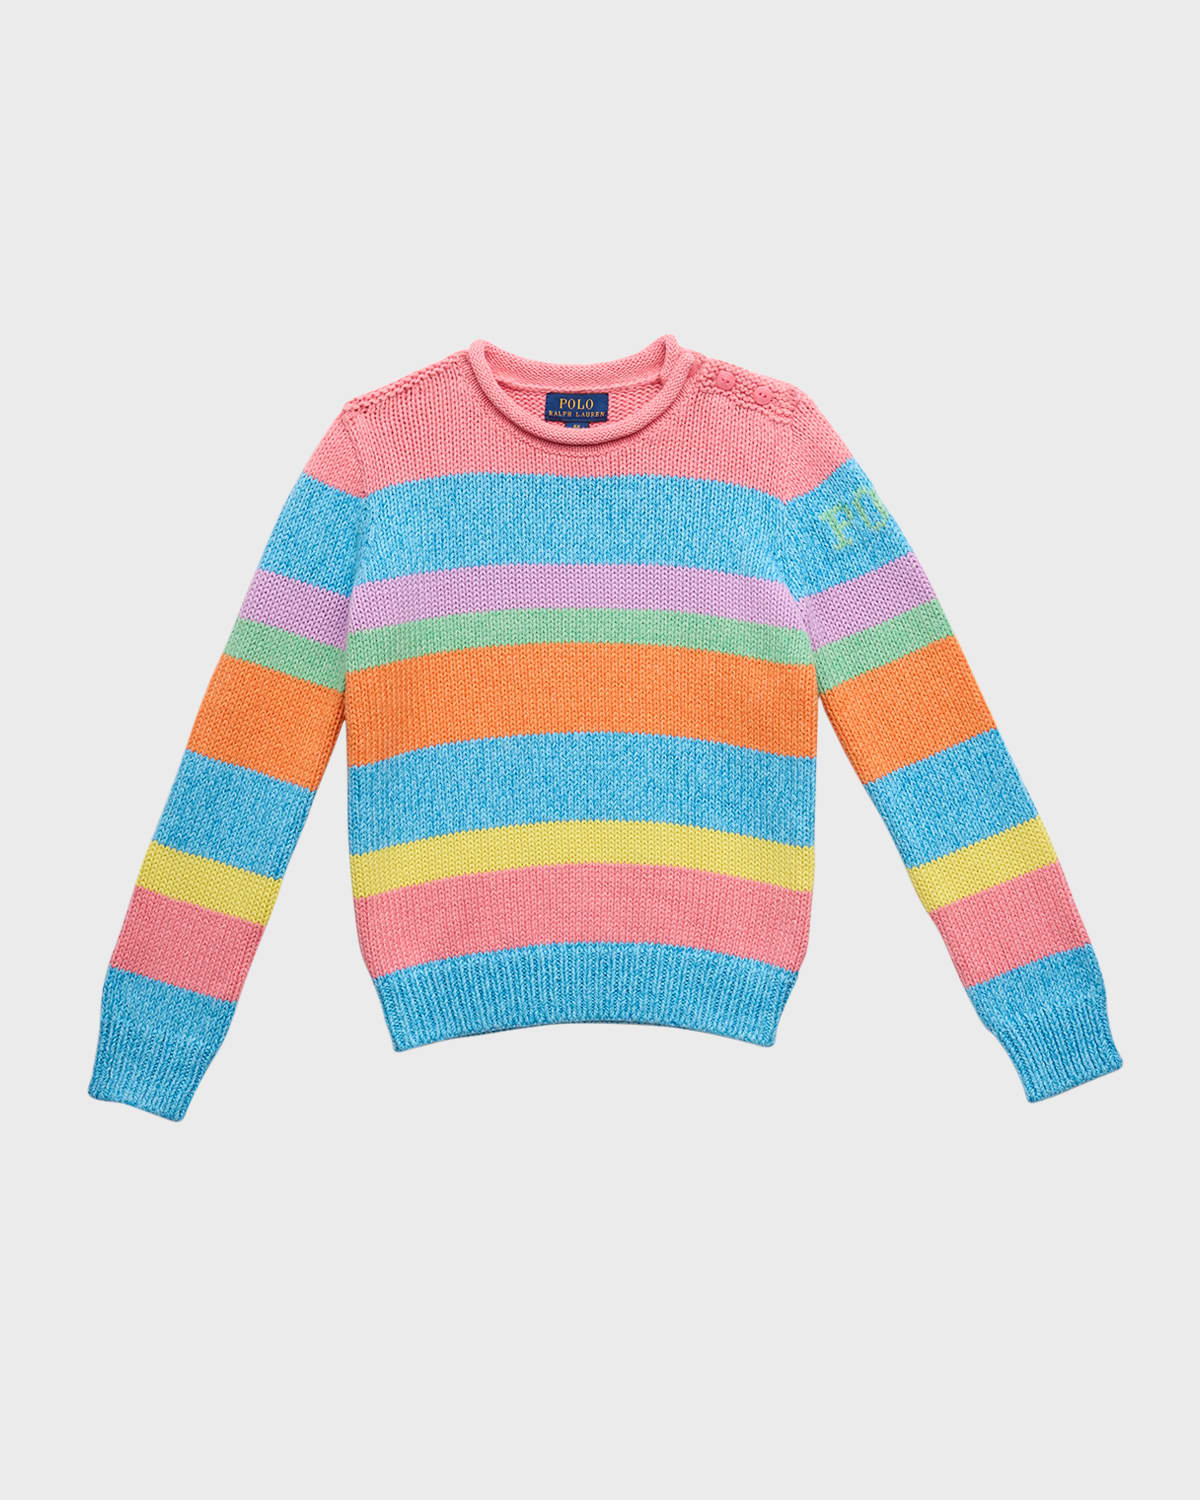 Ralph Lauren Kids' Girl's Multicolor Striped Sweater